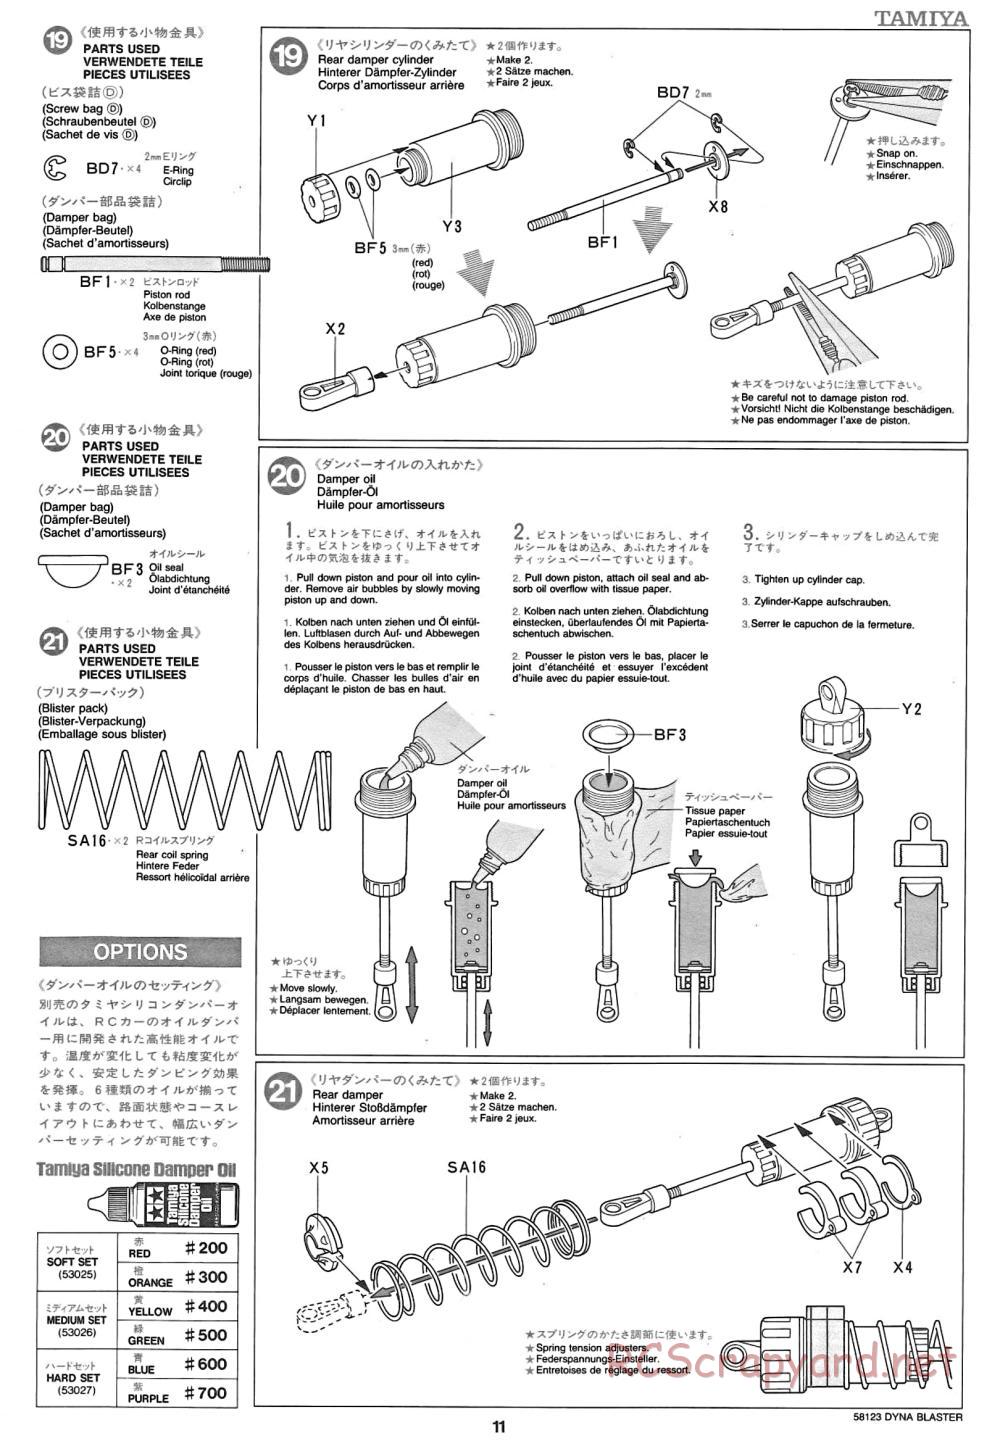 Tamiya - Dyna Blaster Chassis - Manual - Page 11